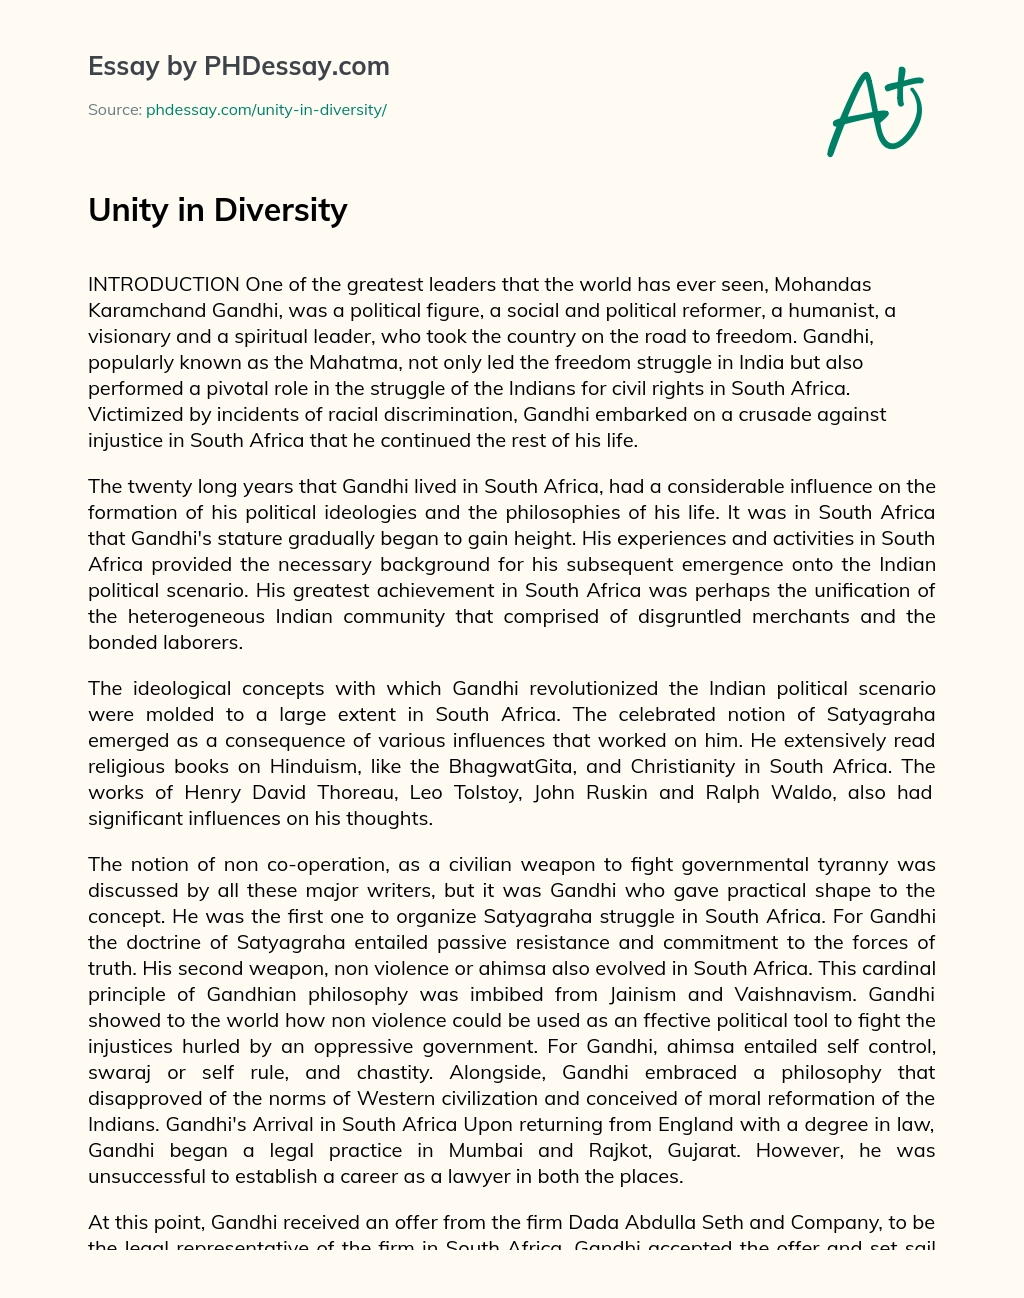 Unity in Diversity essay